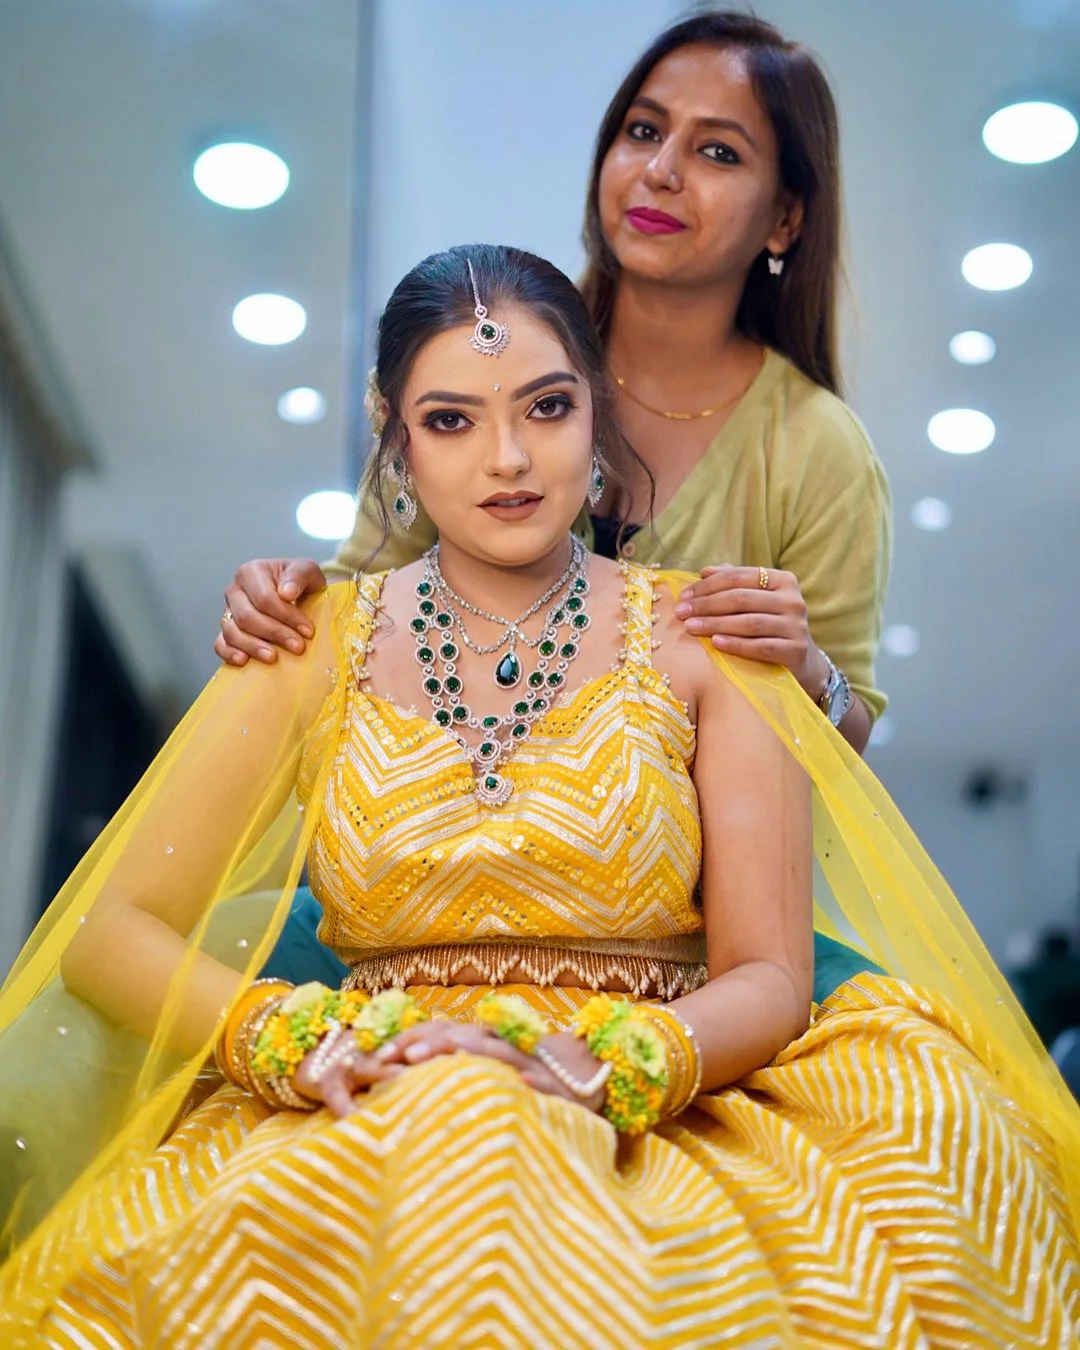 Best Makeup Artist service in Jaipur